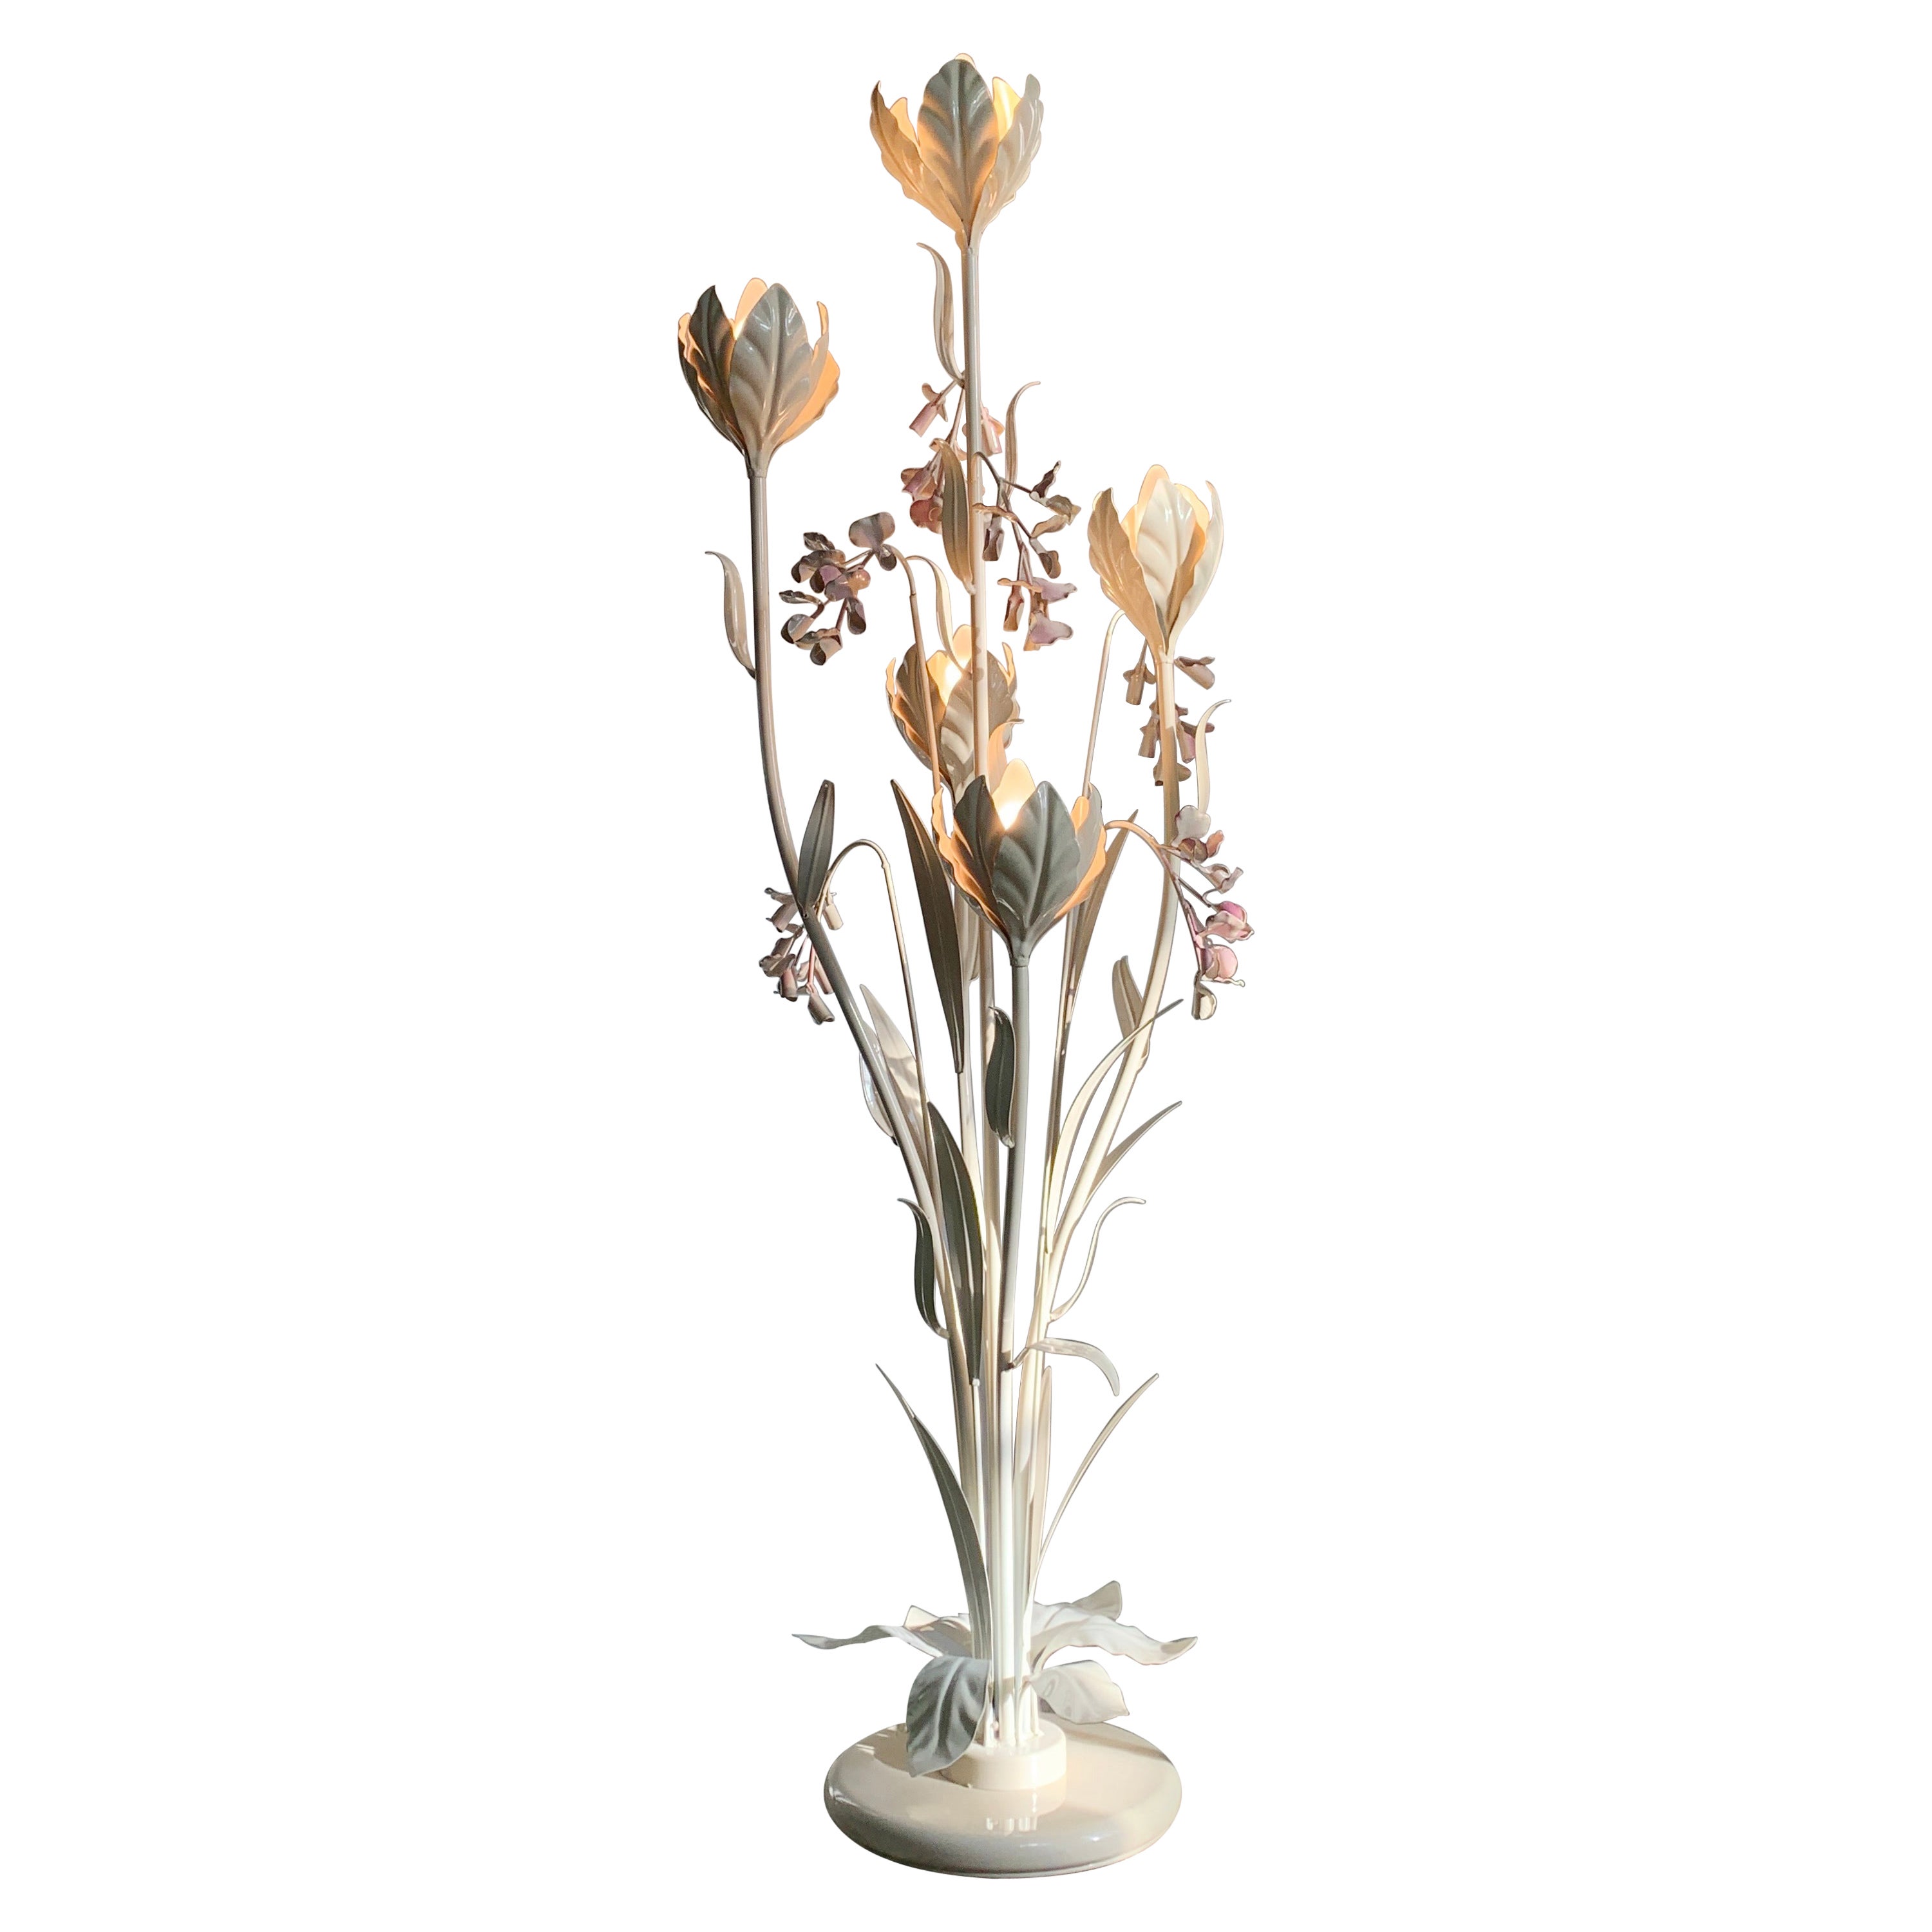 Hans Kogl Cream & Pink Flower Toleware Floor Lamp For Sale